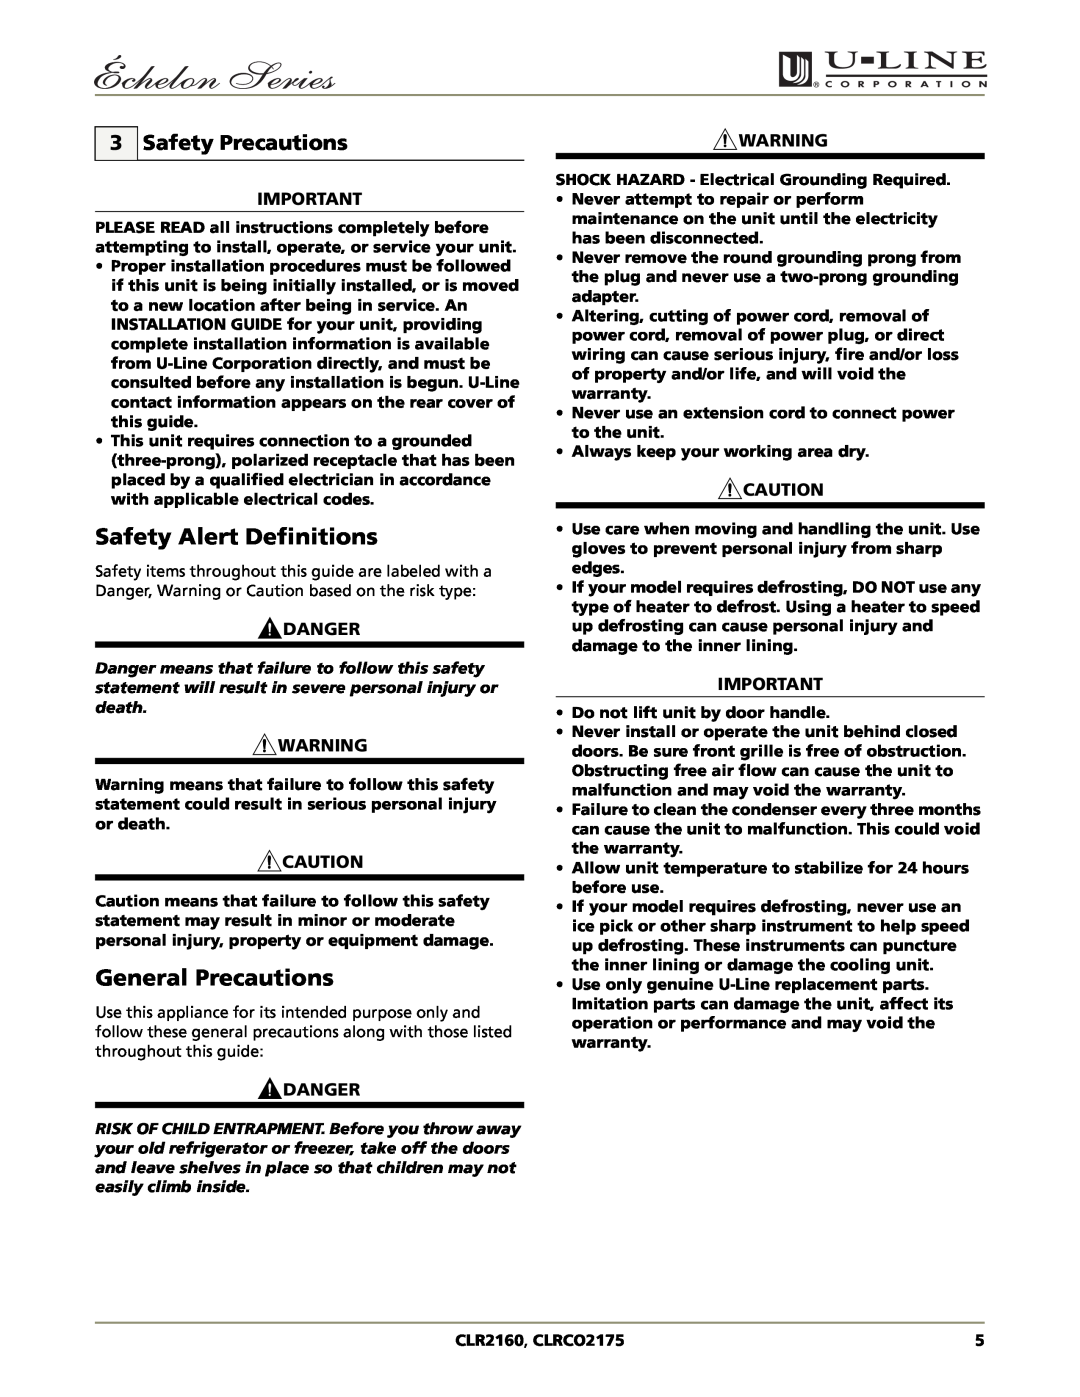 U-Line CLR2160, CLRCO2175 manual Safety Alert Definitions, General Precautions, Safety Precautions, Danger 